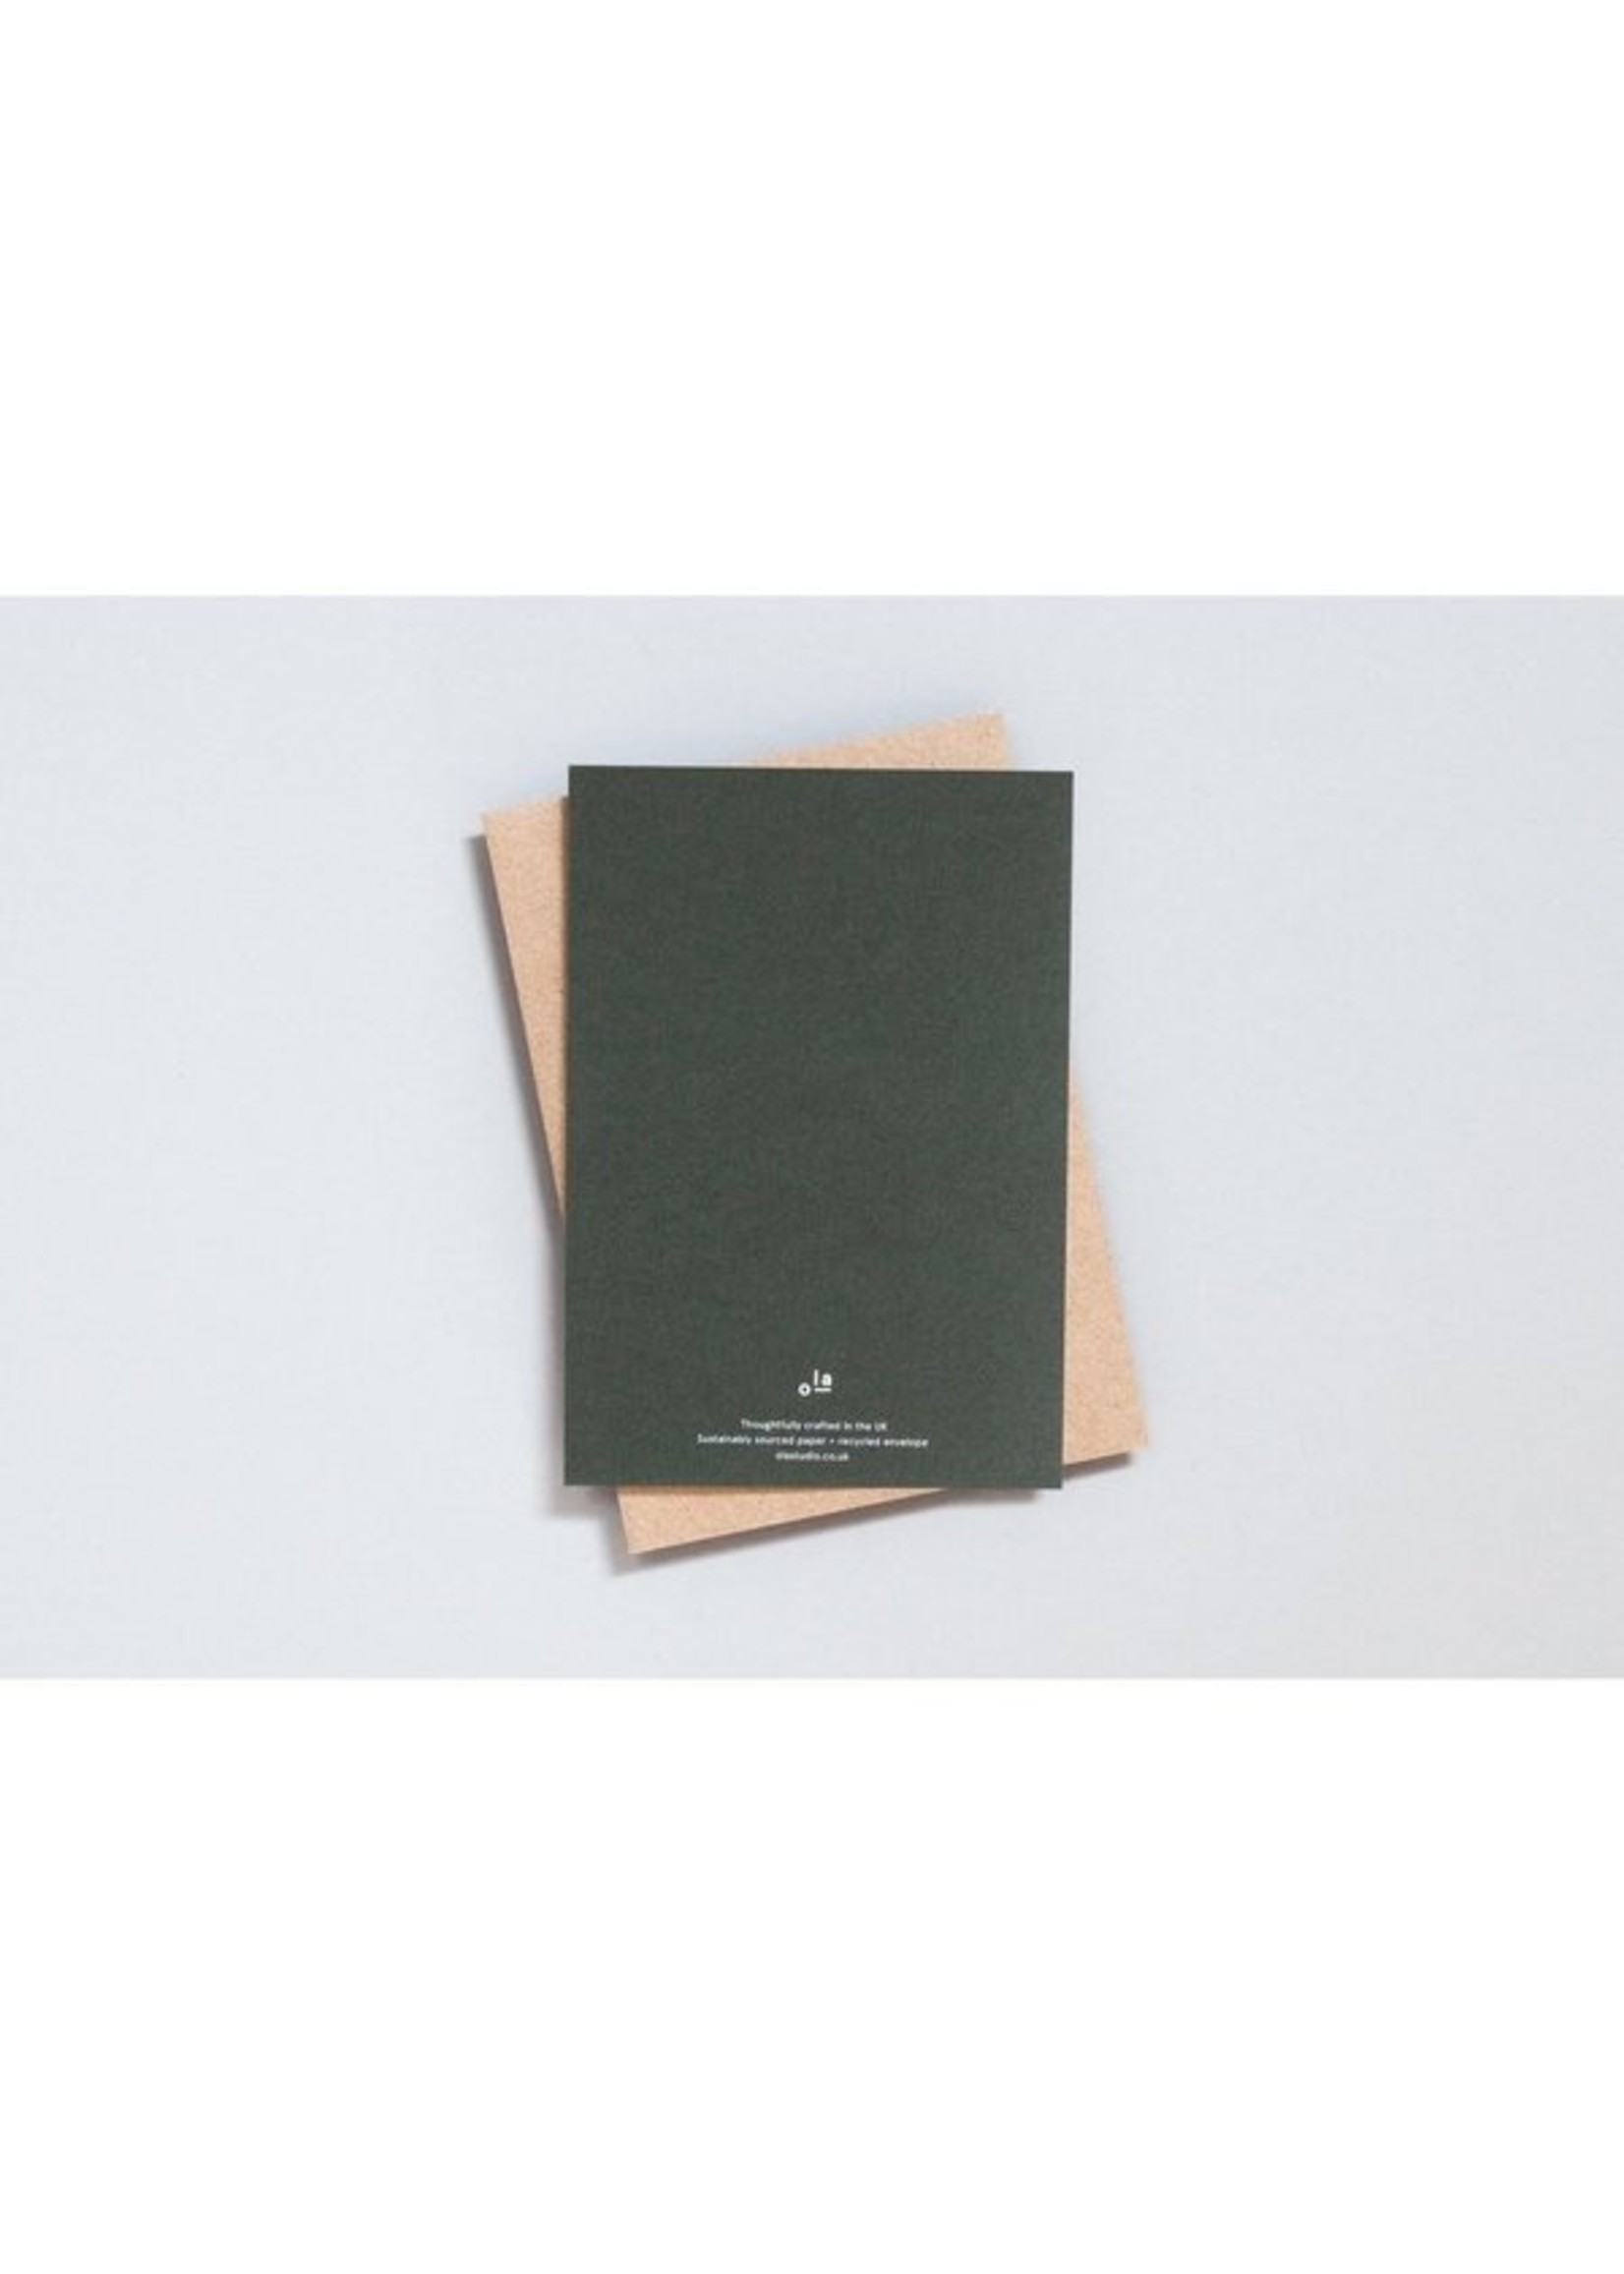 Ola Ola Foil Blocked Cards: Present Print in Green/Brass